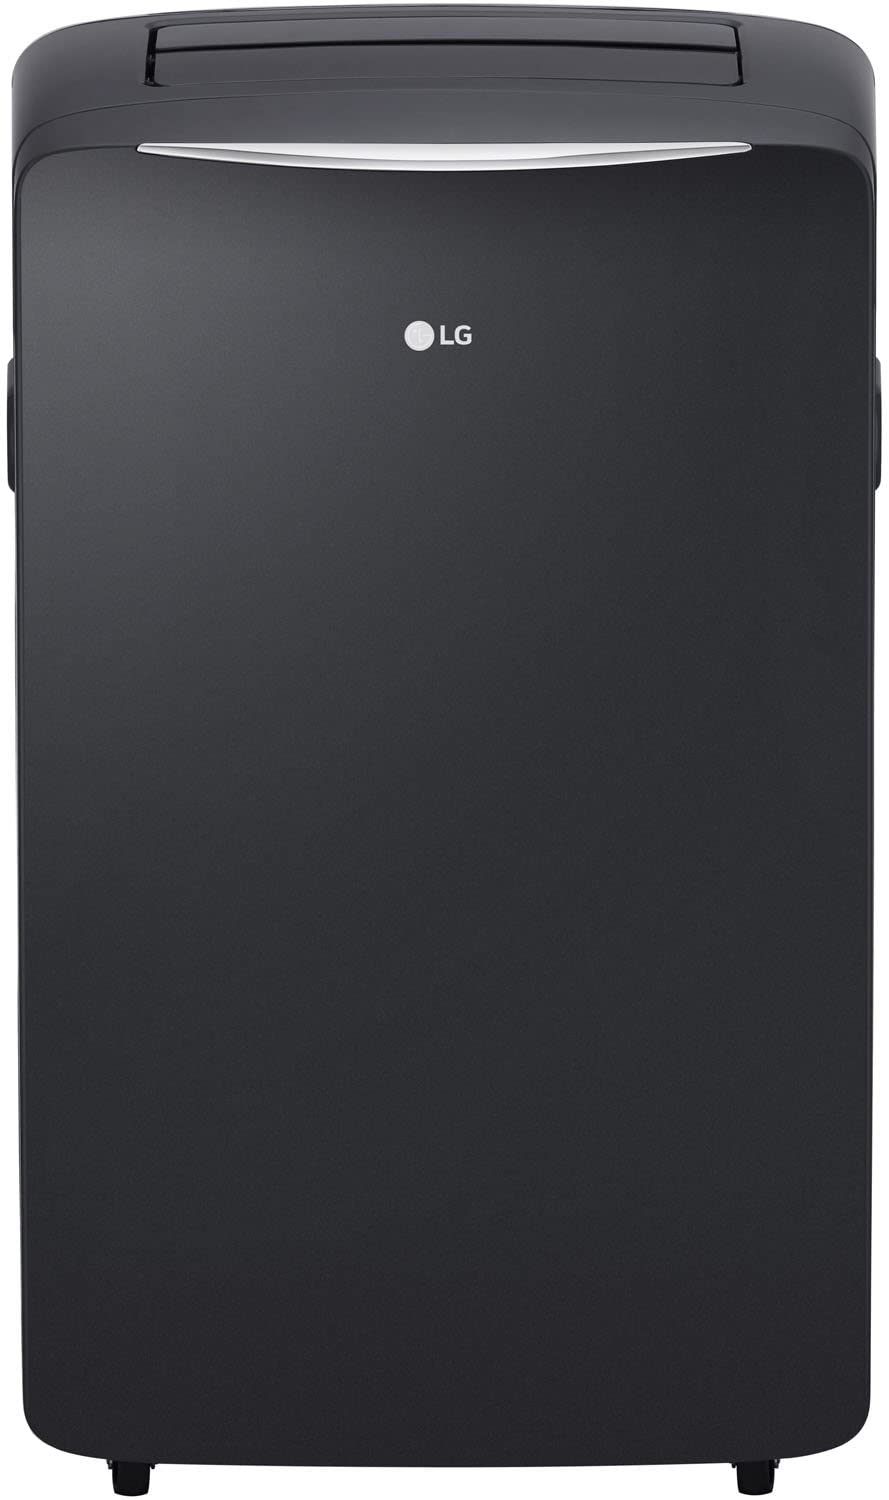 LG LP1417SHR Portable Air Conditioner